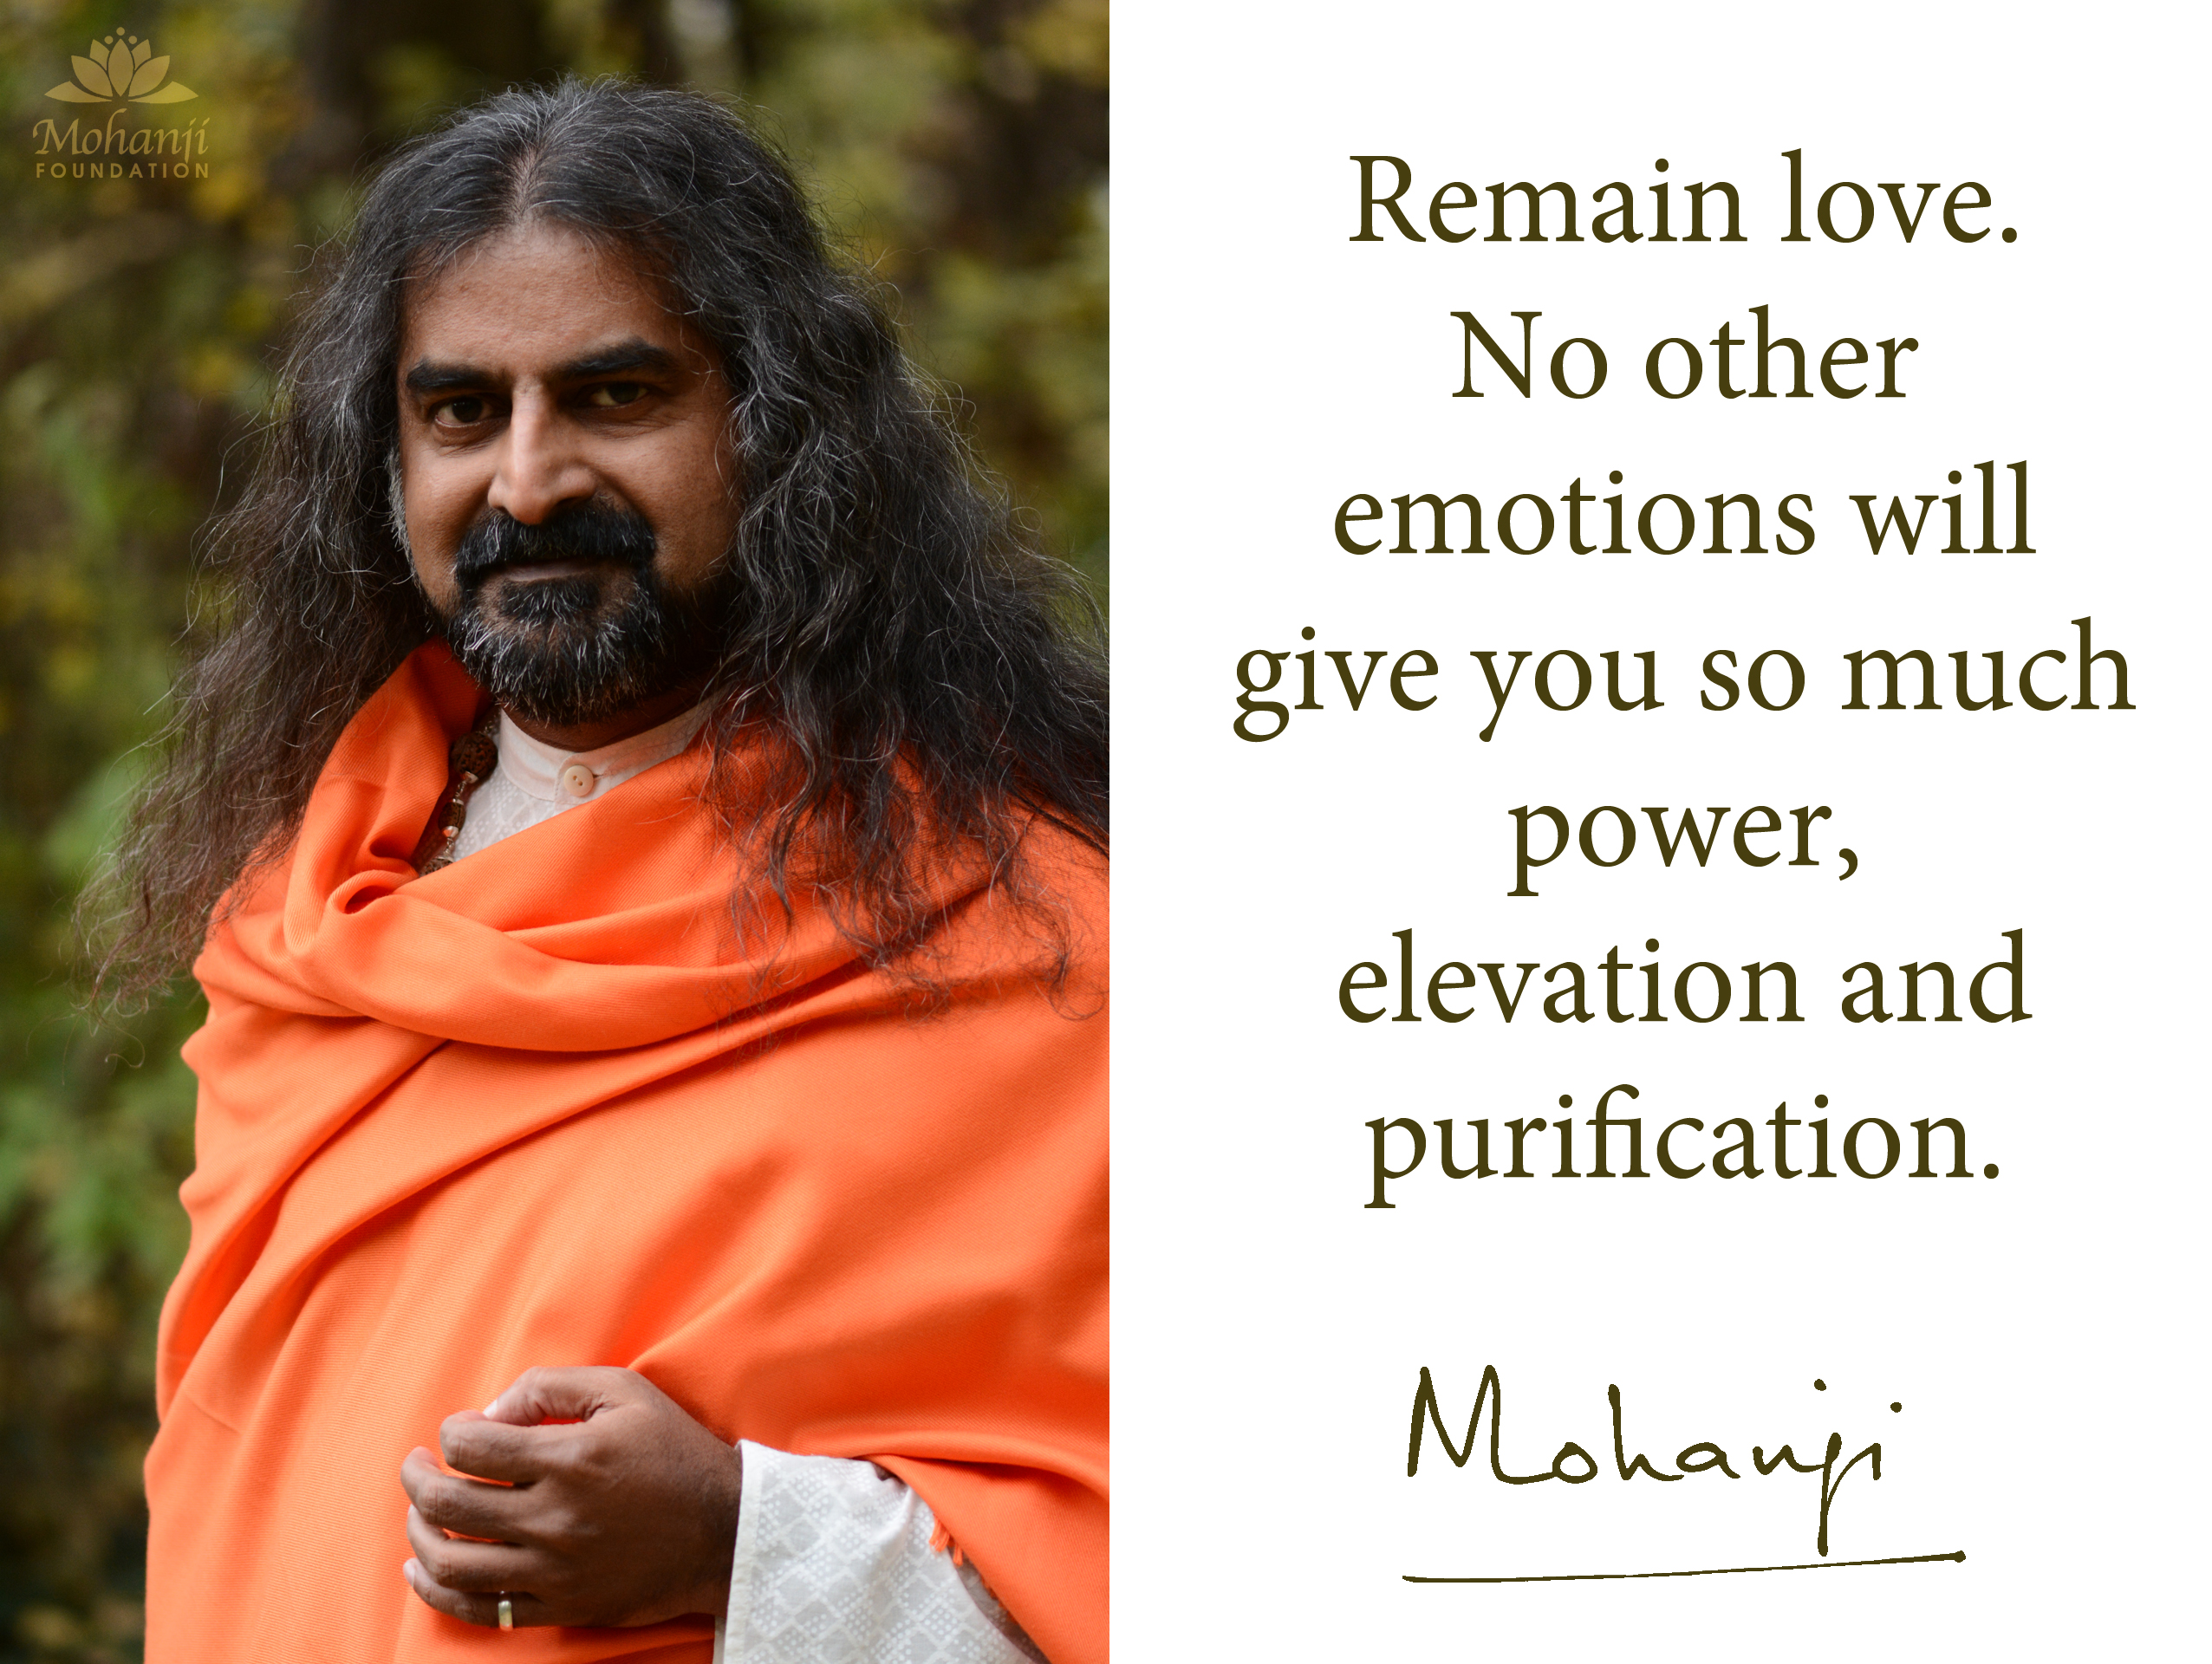 Mohanji quote - Remain love